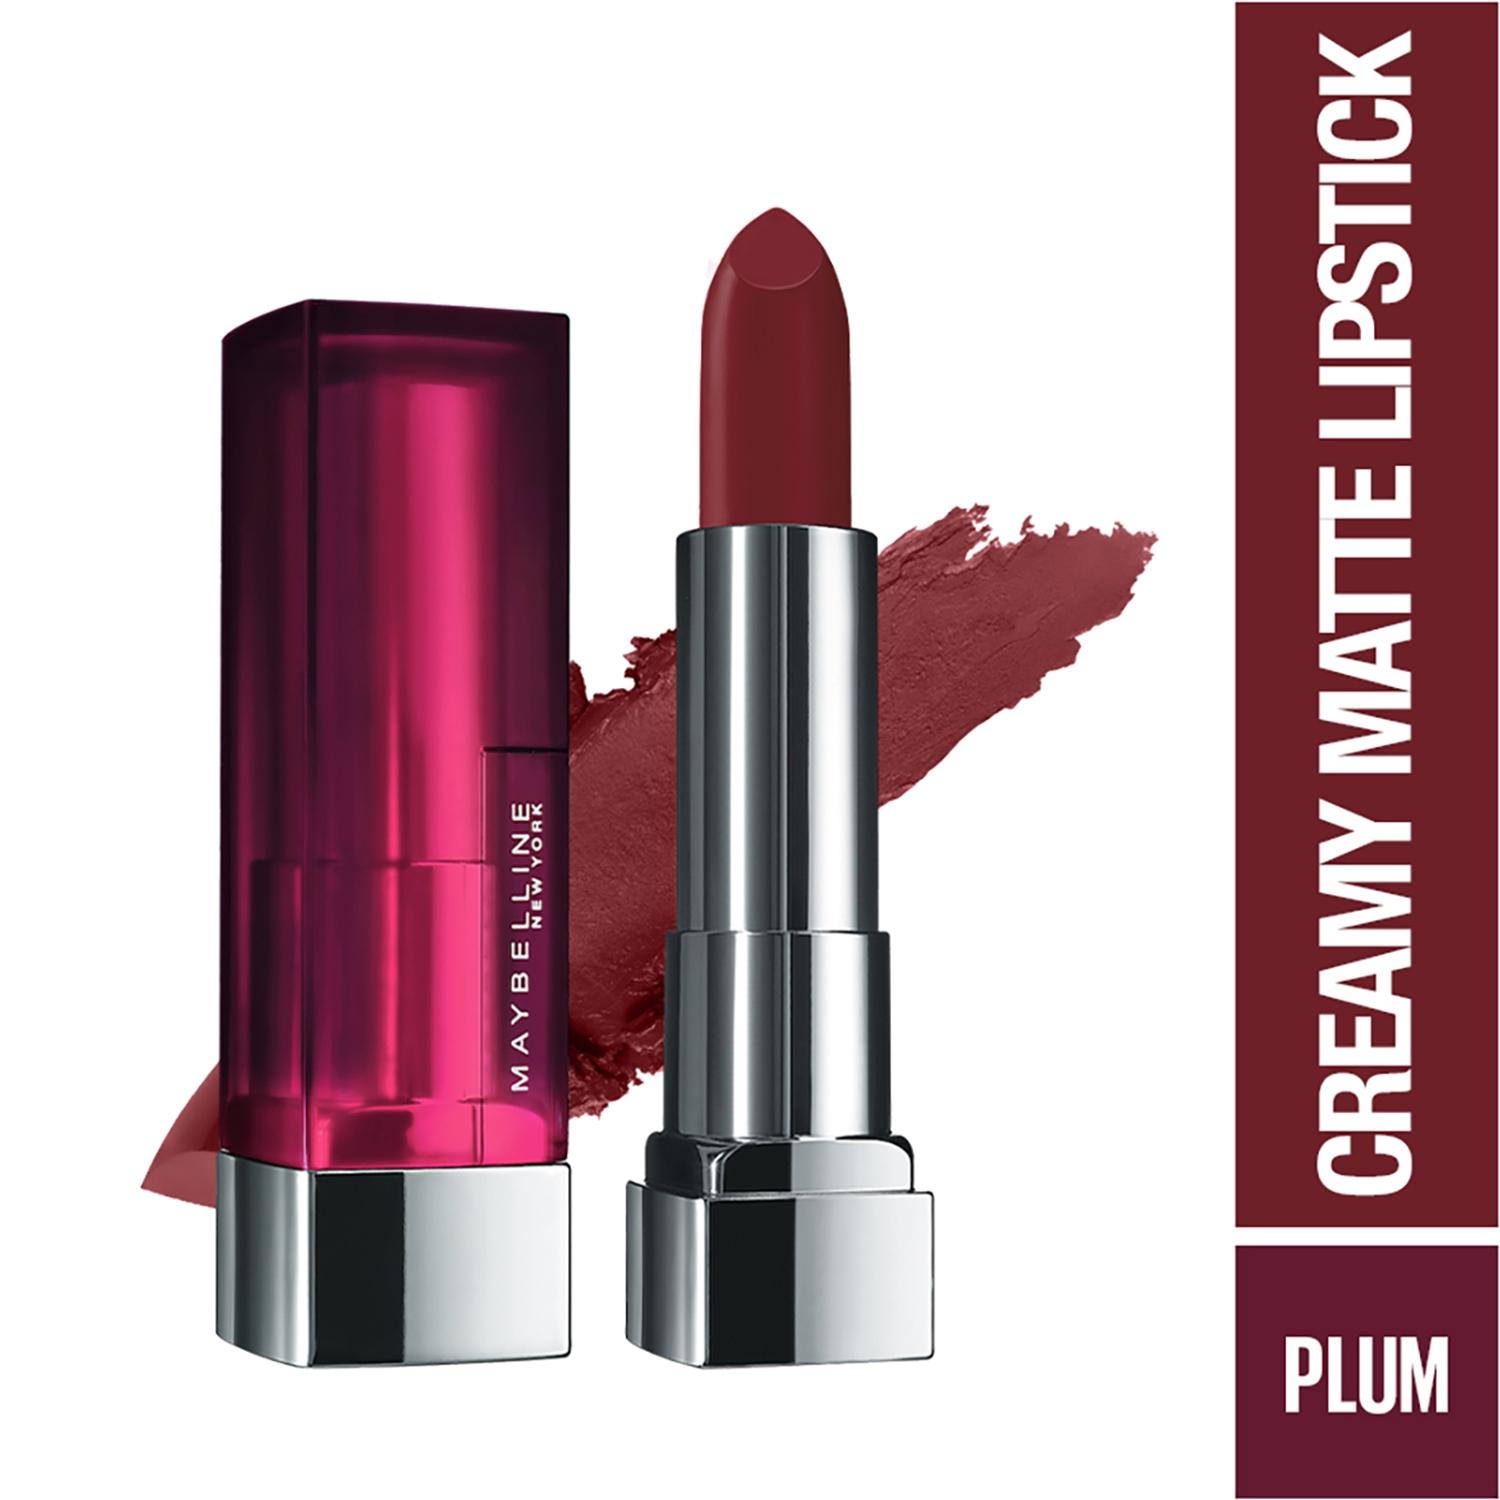 Maybelline New York Color Sensational Powder Matte Lipstick - 808 Plum Perfection (3.9g)